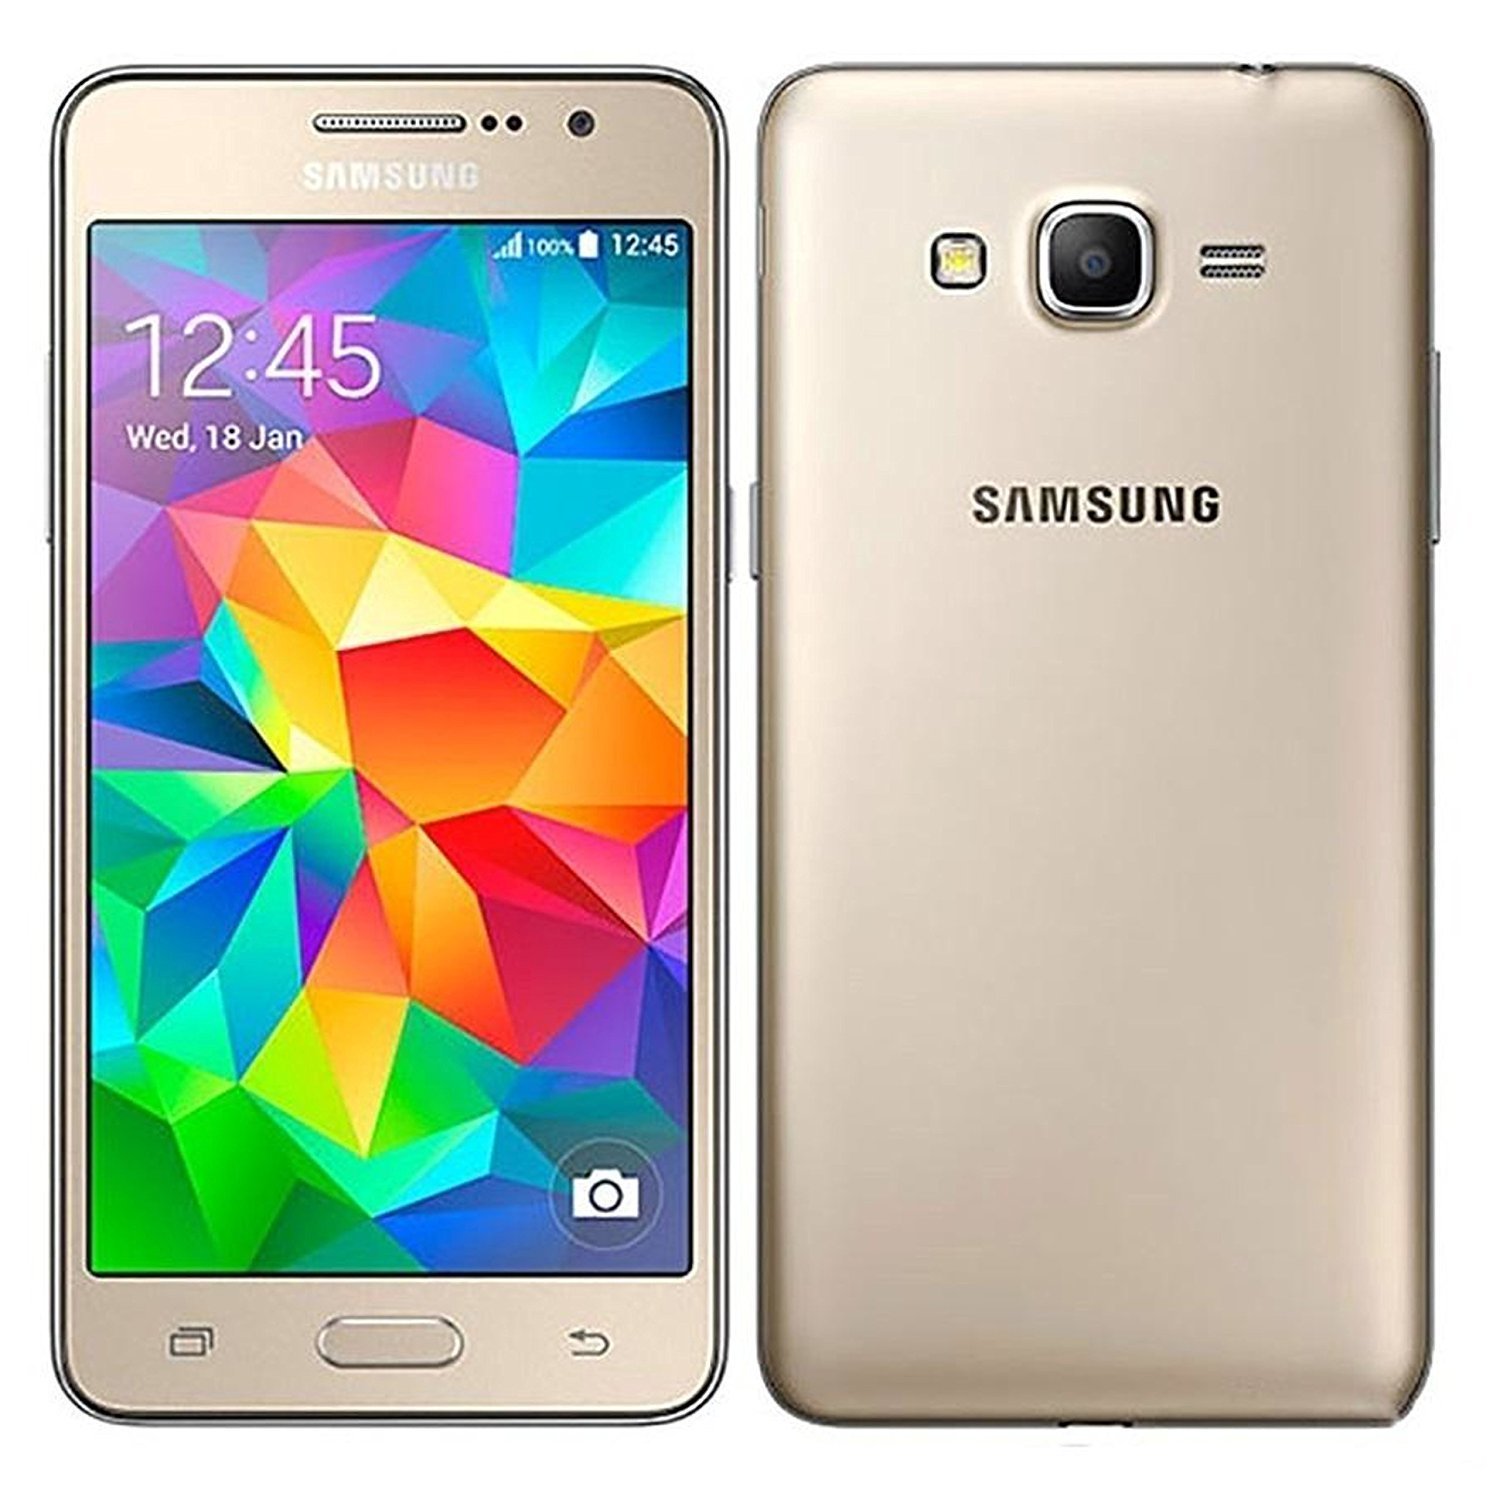 Samsung Galaxy Grand Prime Dual Sim Factory UNLOCKED Phone - GOLD (International Version) (PRECOMMANDEZ 50% DOWN)